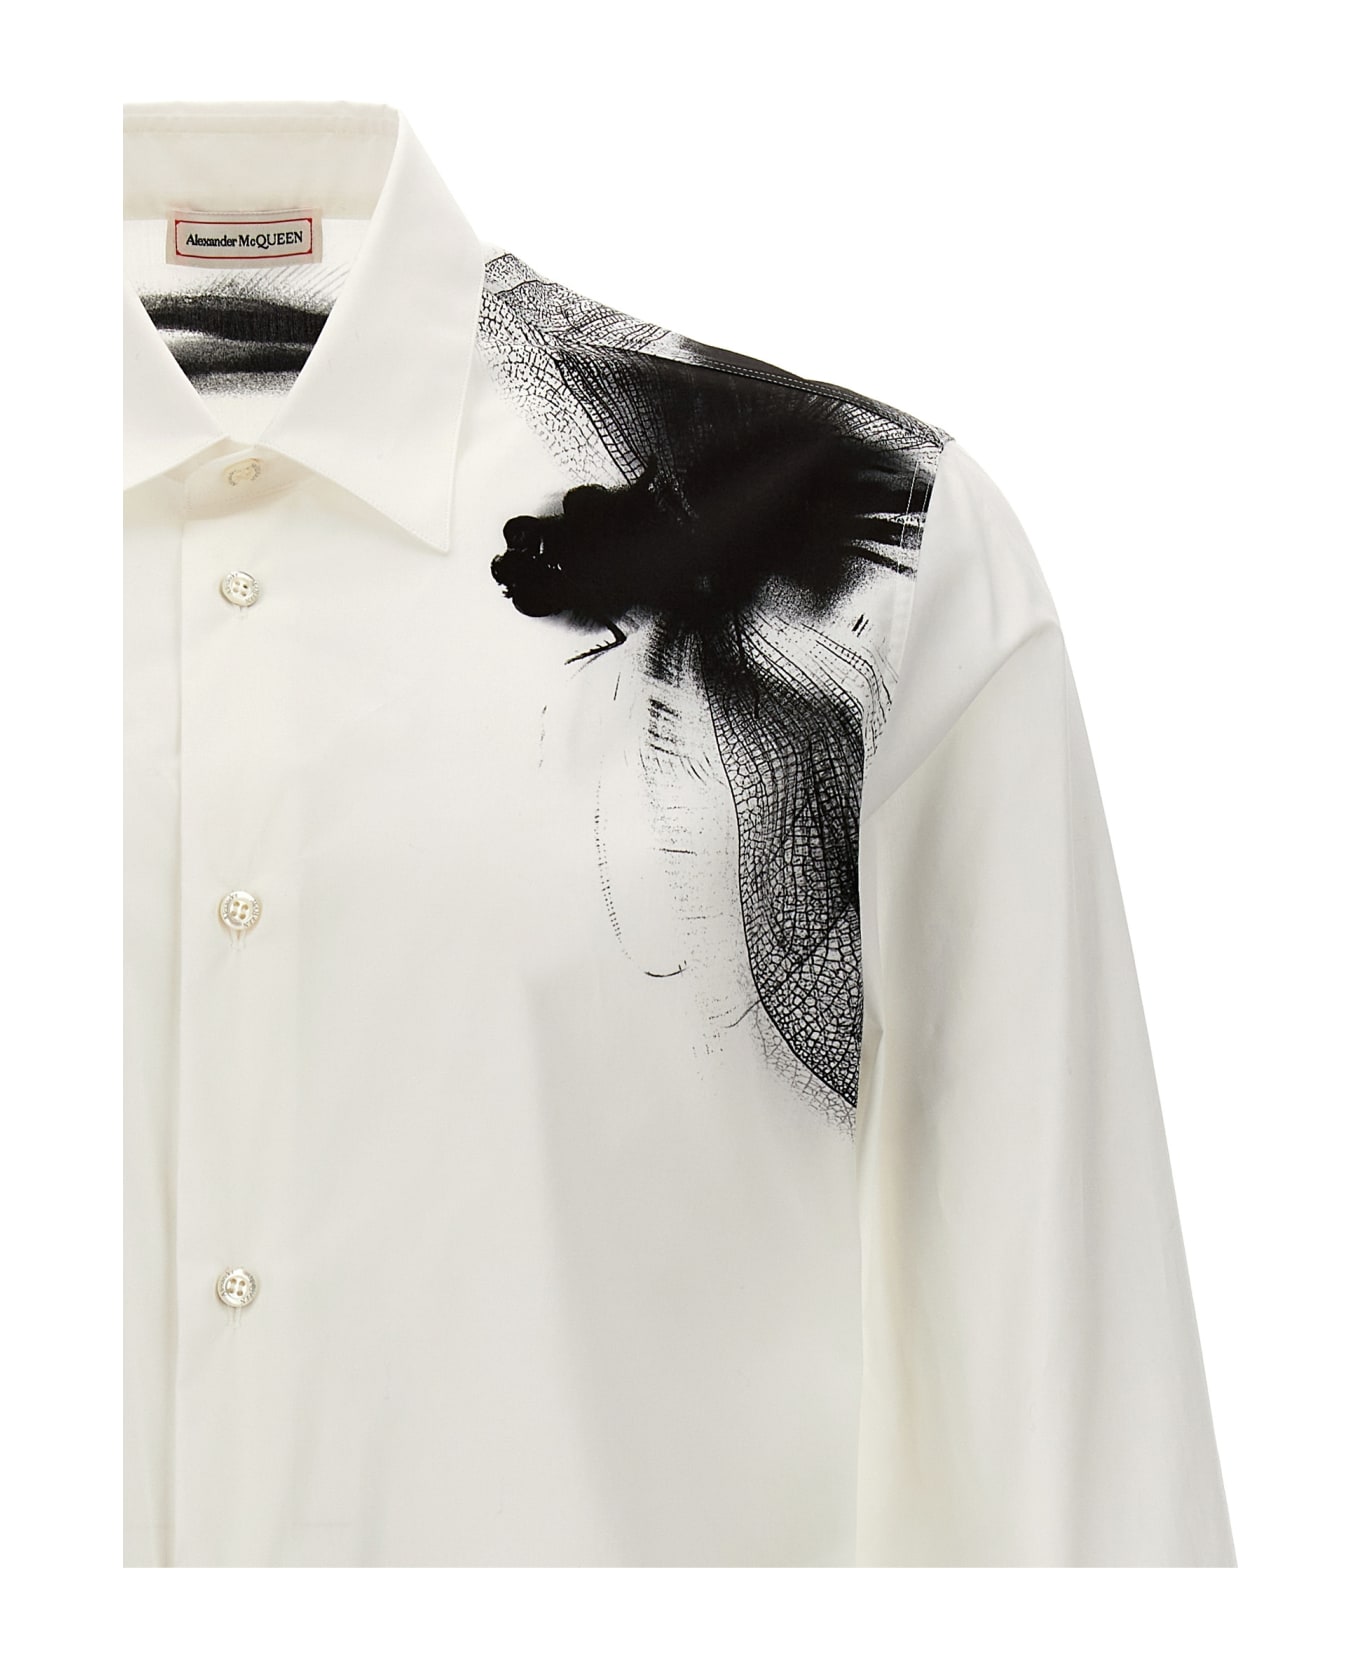 Alexander McQueen Printed Shirt - White Black